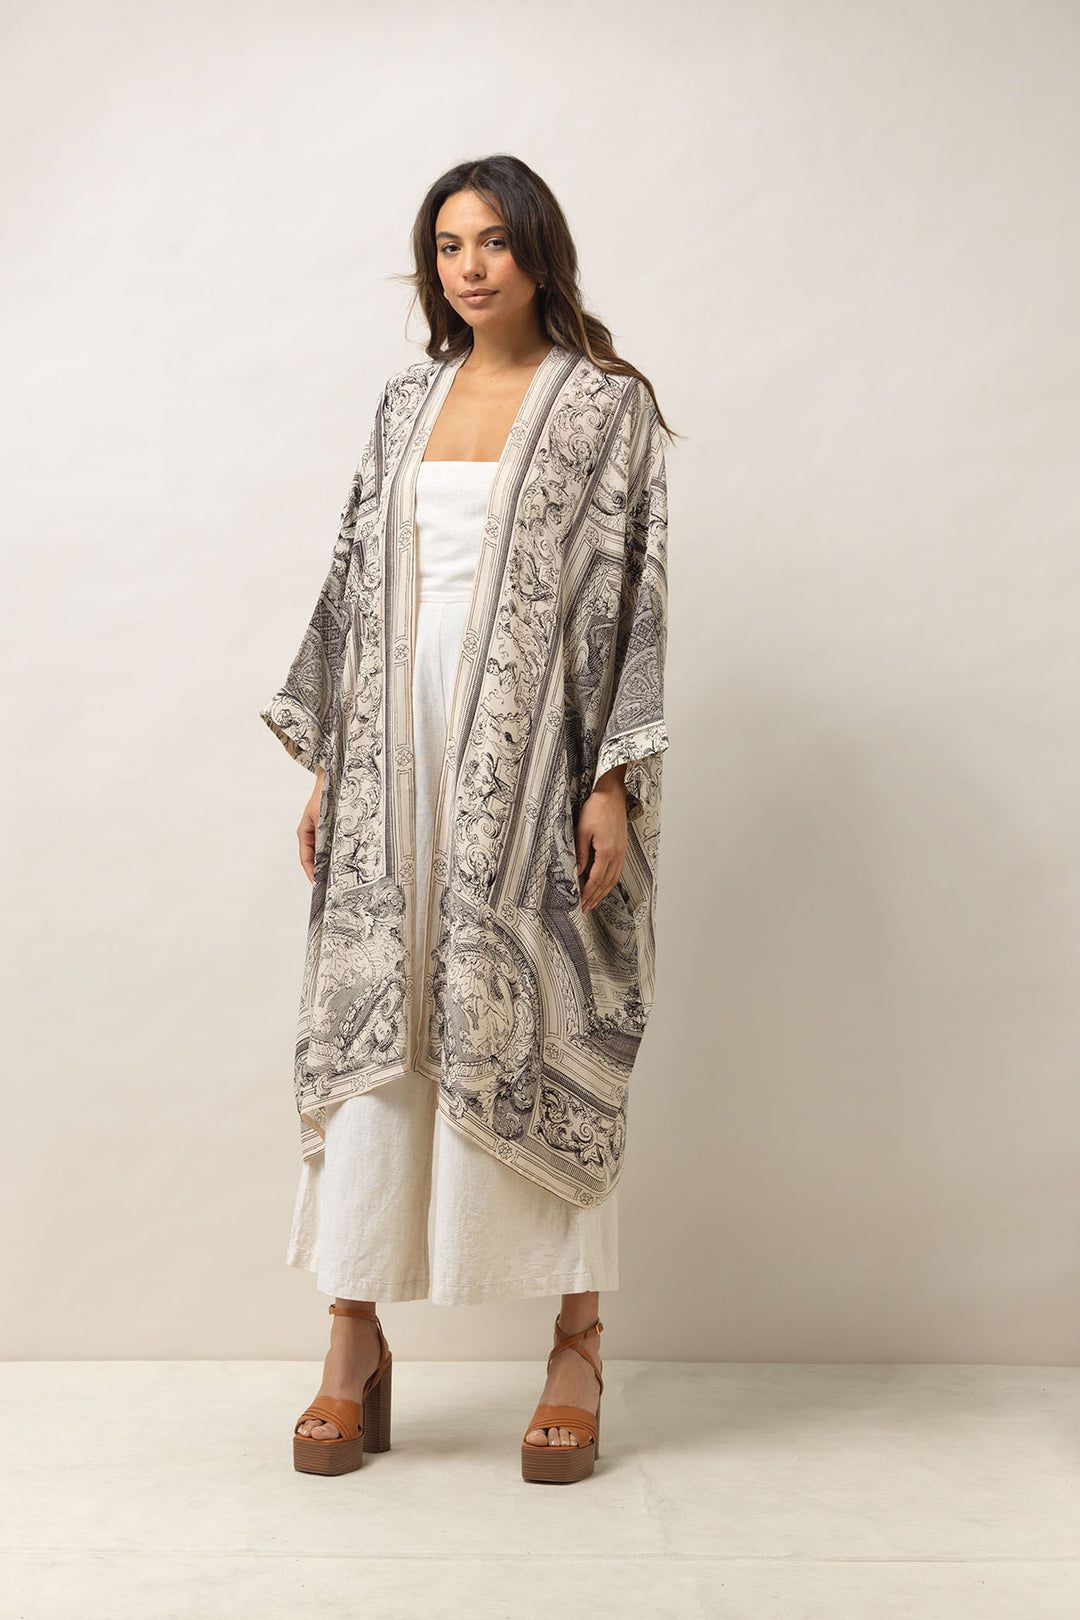 Women's long kimono style jacket in cherub print by One Hundred Stars